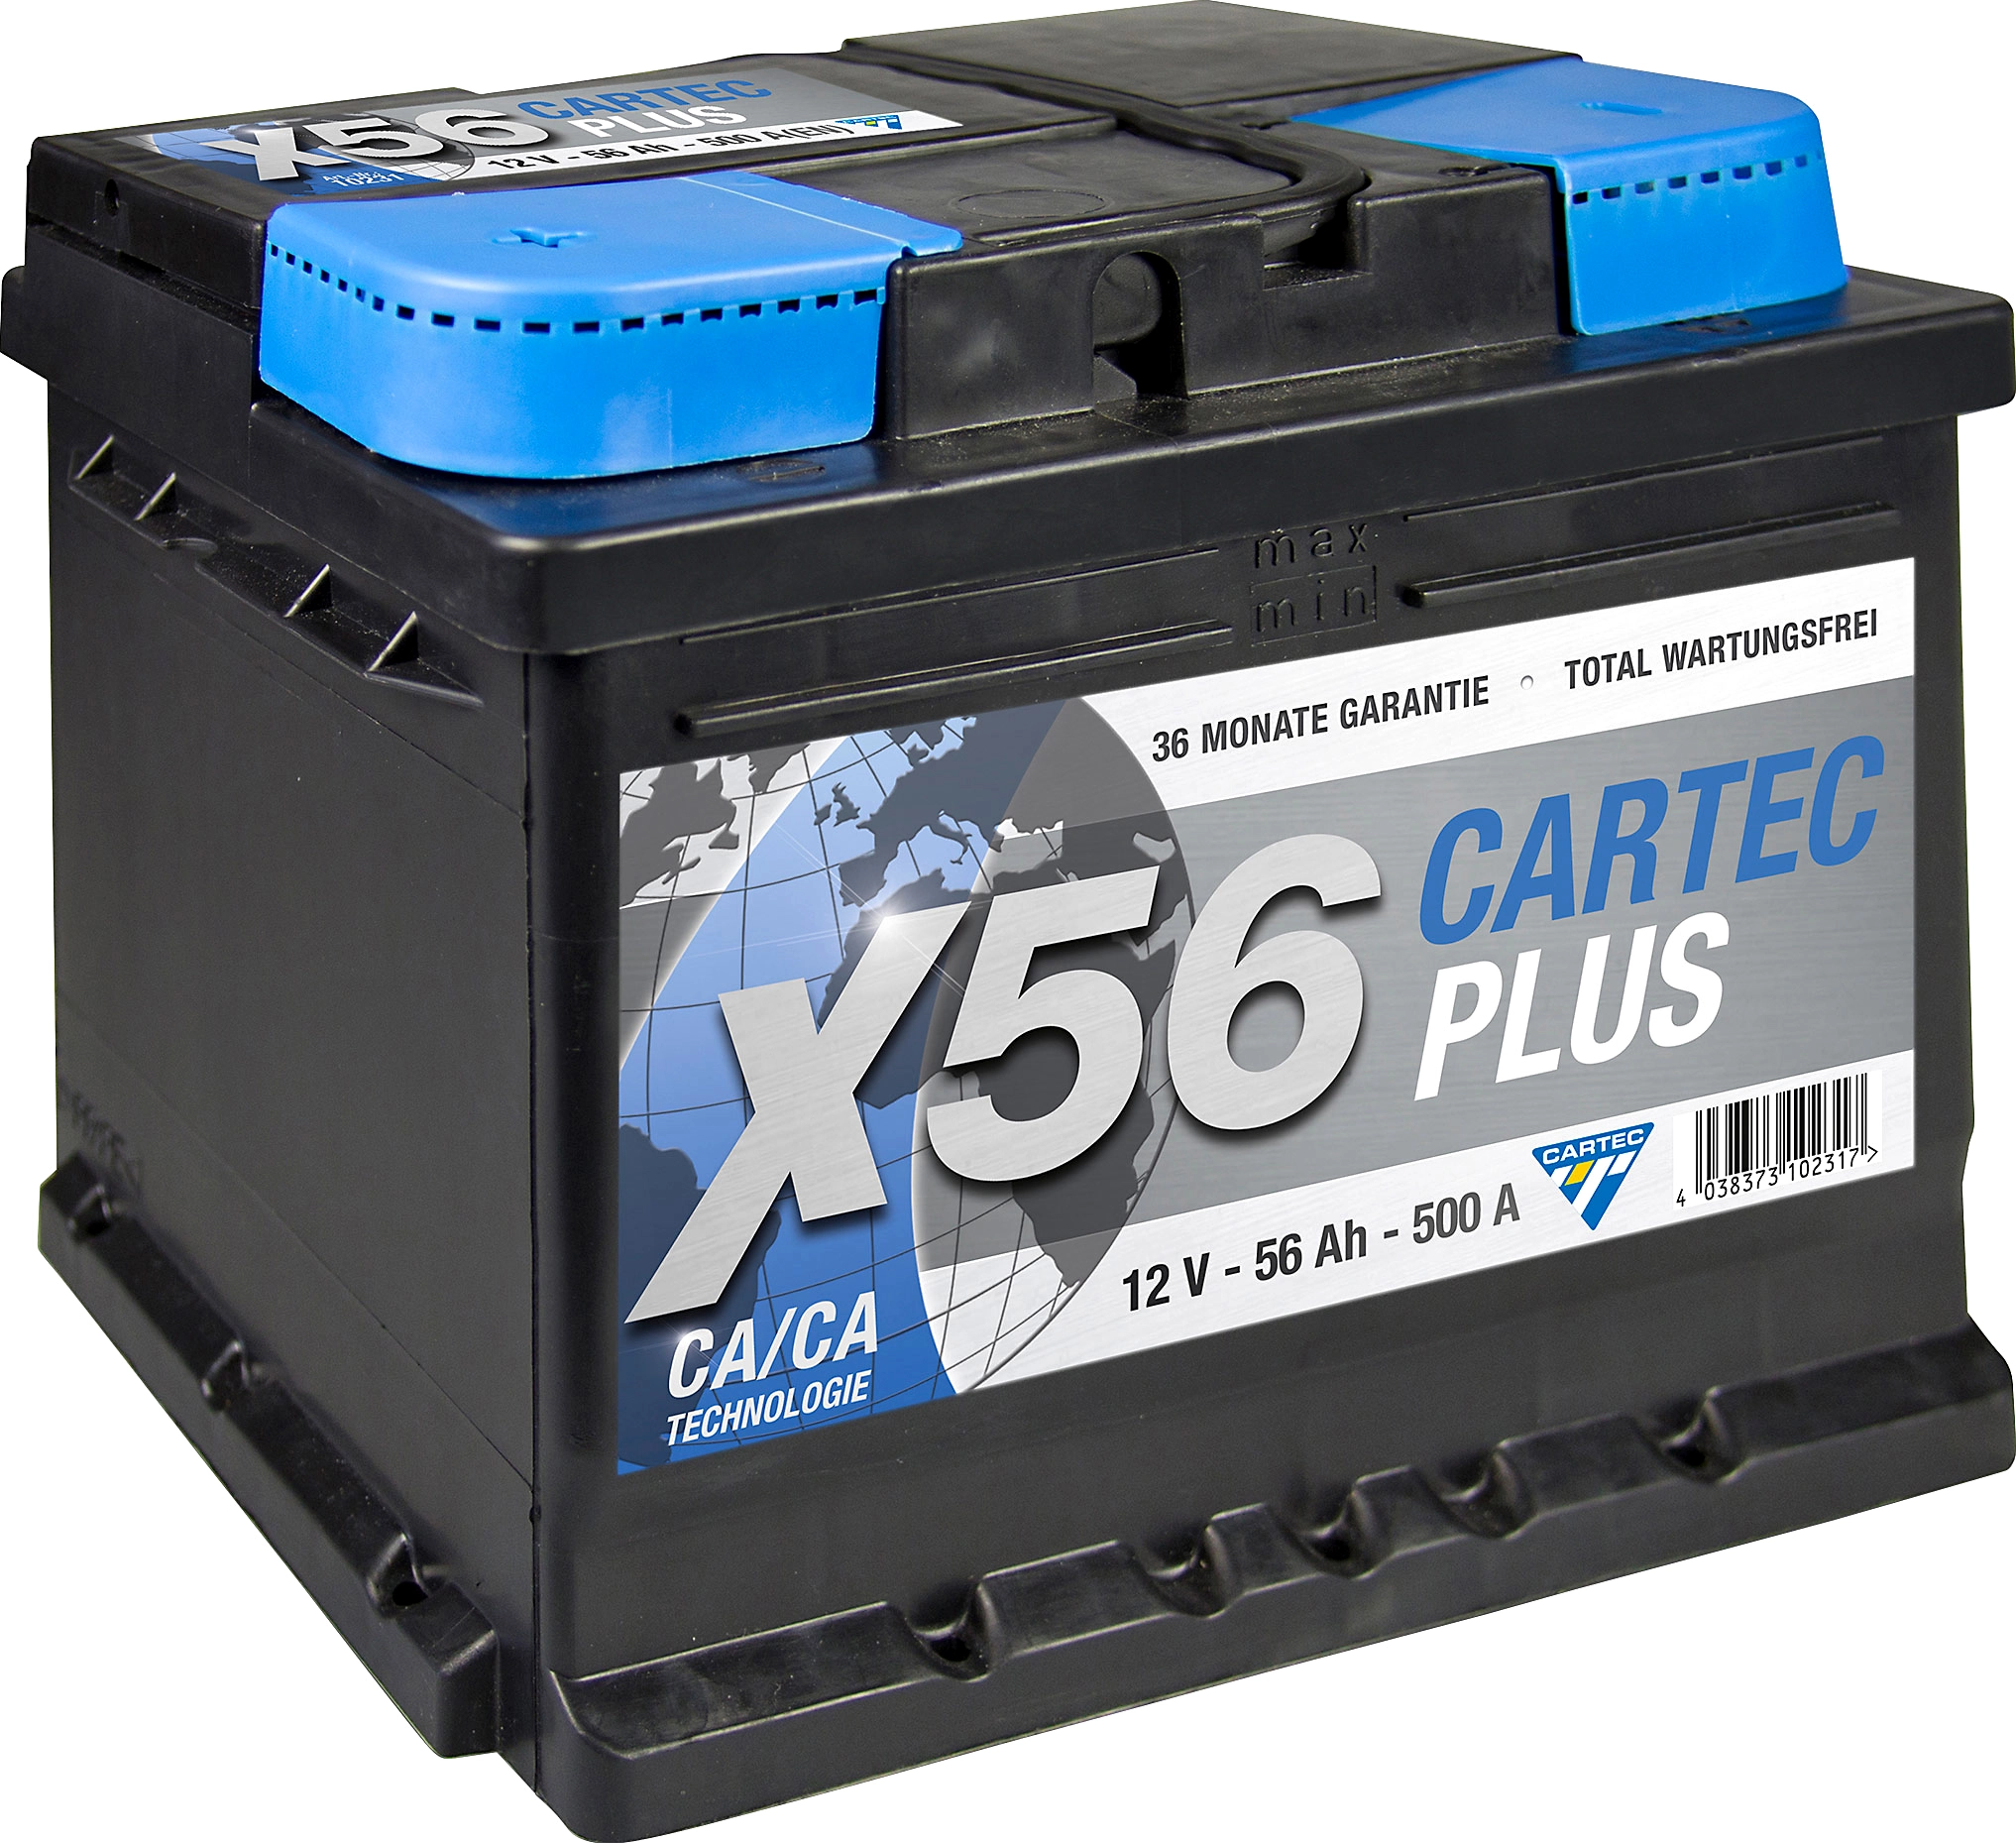 Cartec Plus Starterbatterie 56 Ah/500 A kaufen bei OBI